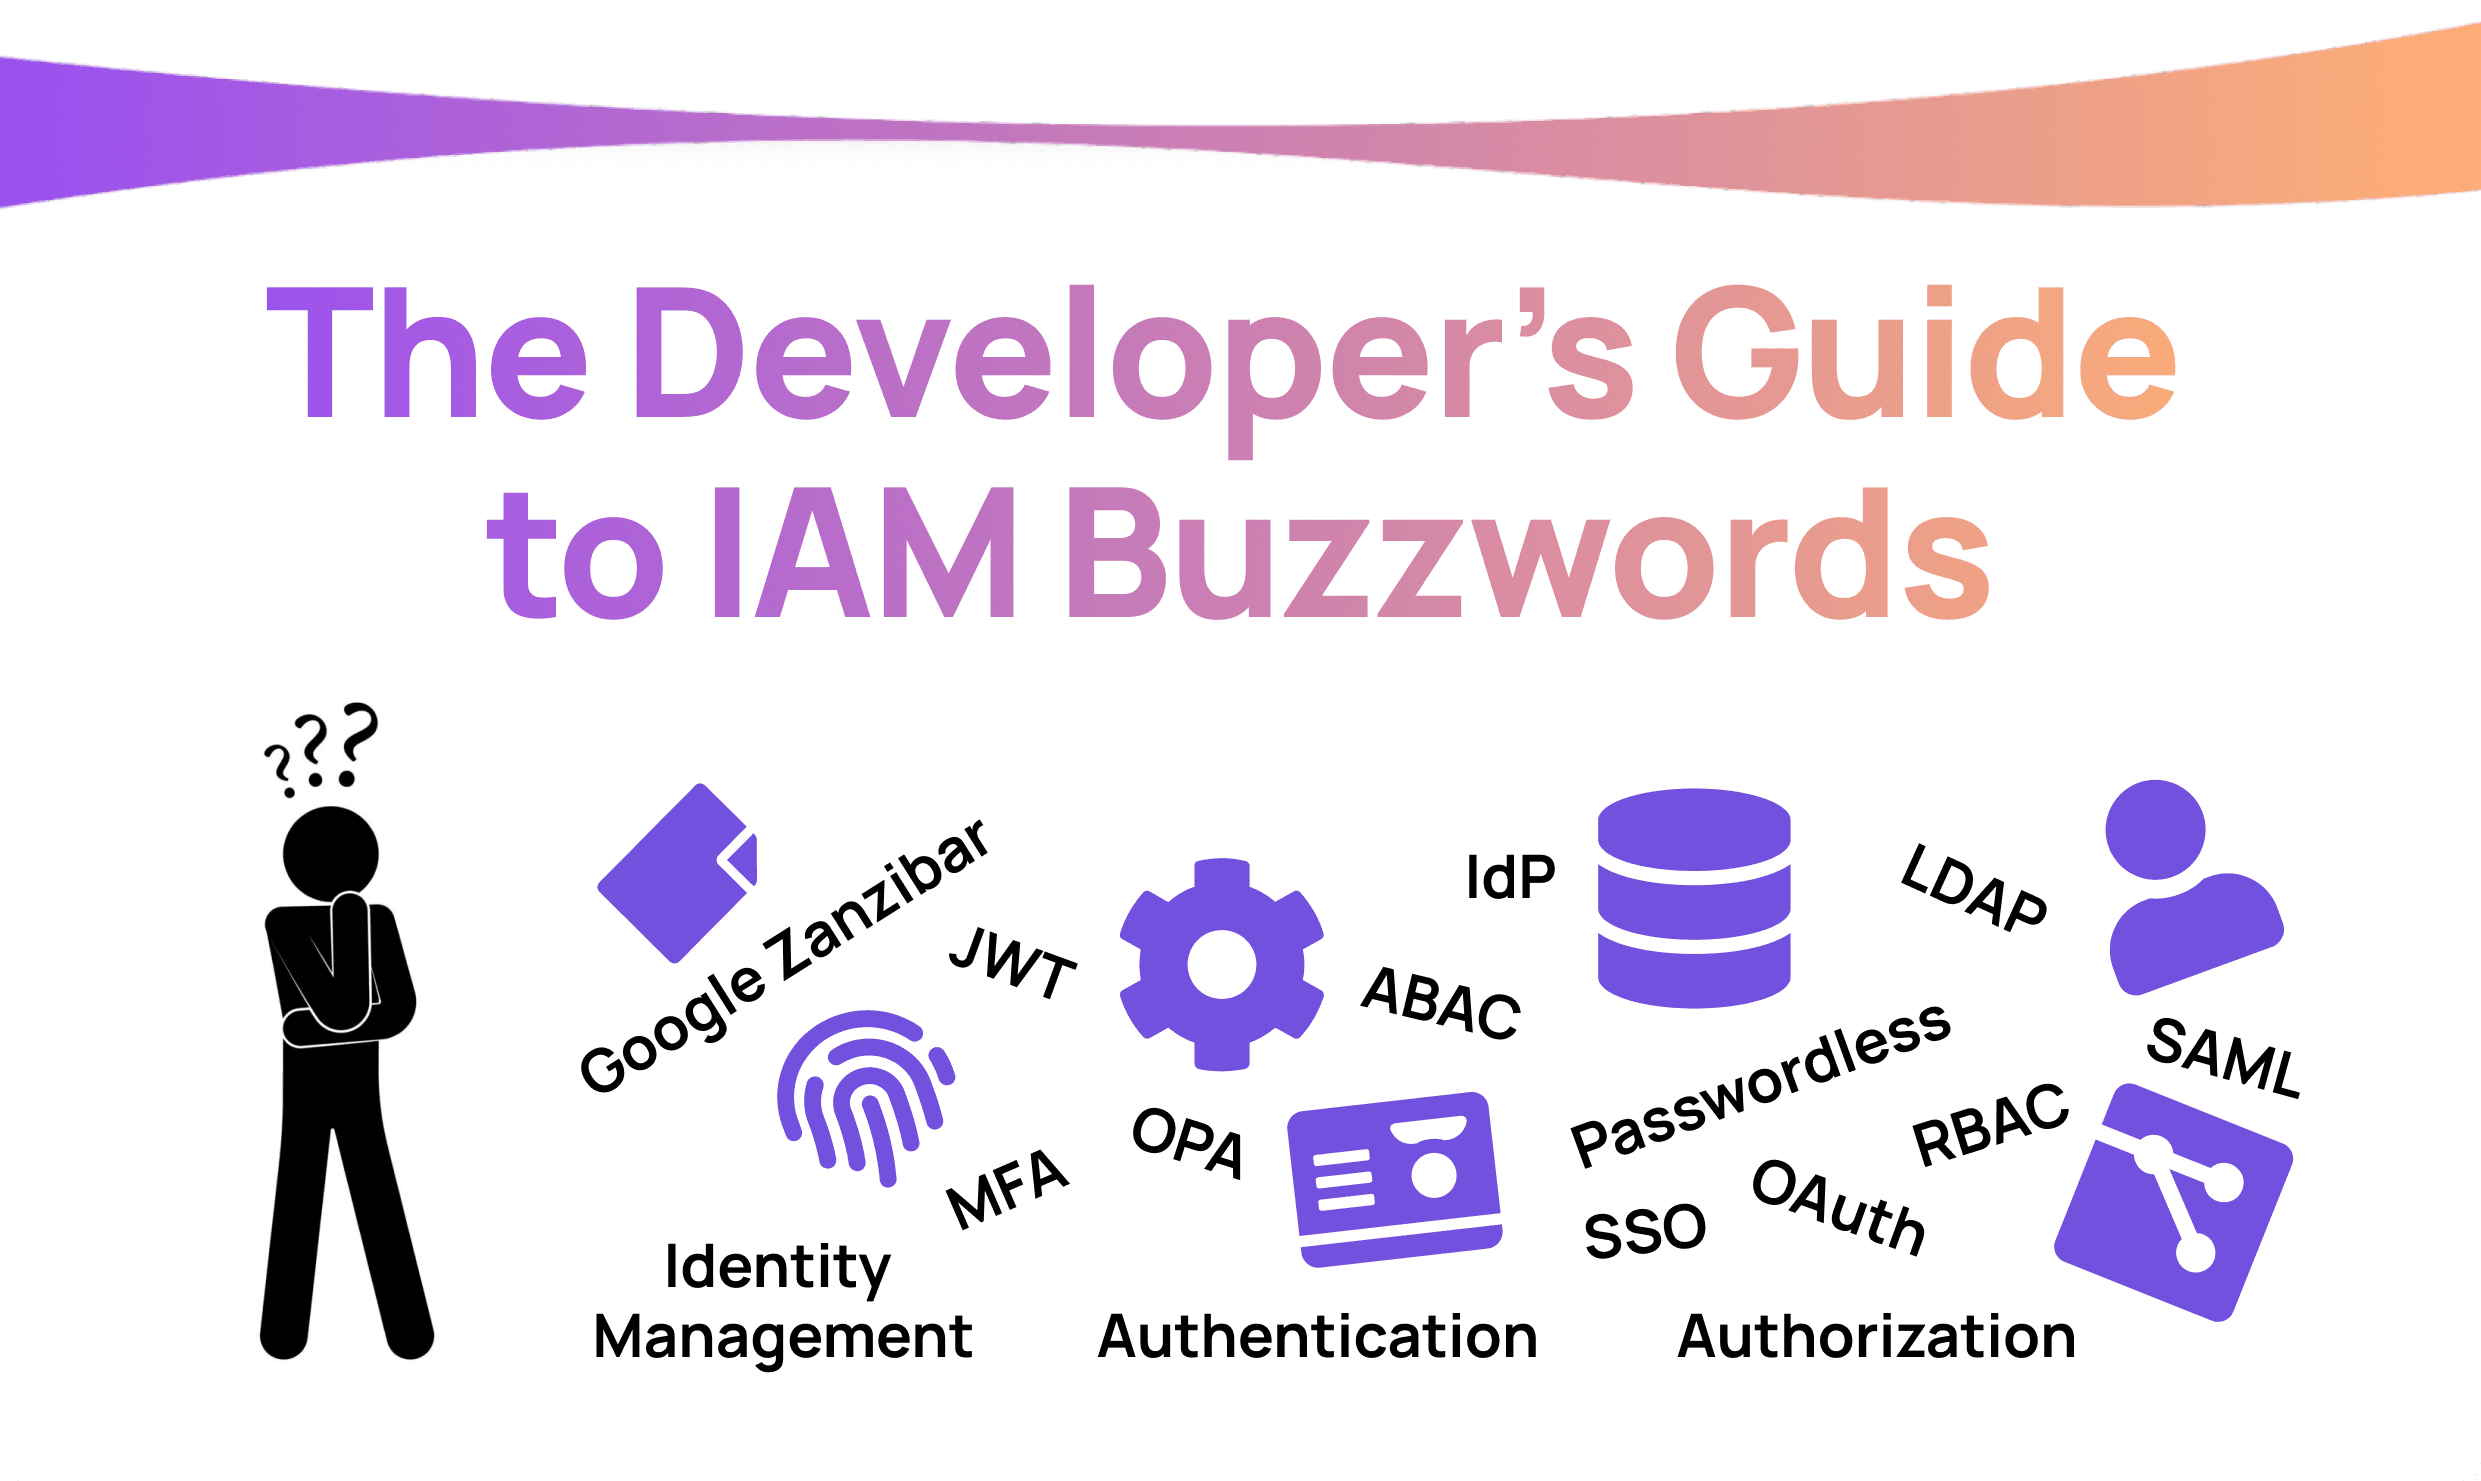 The developer’s guide to IAM buzzwords